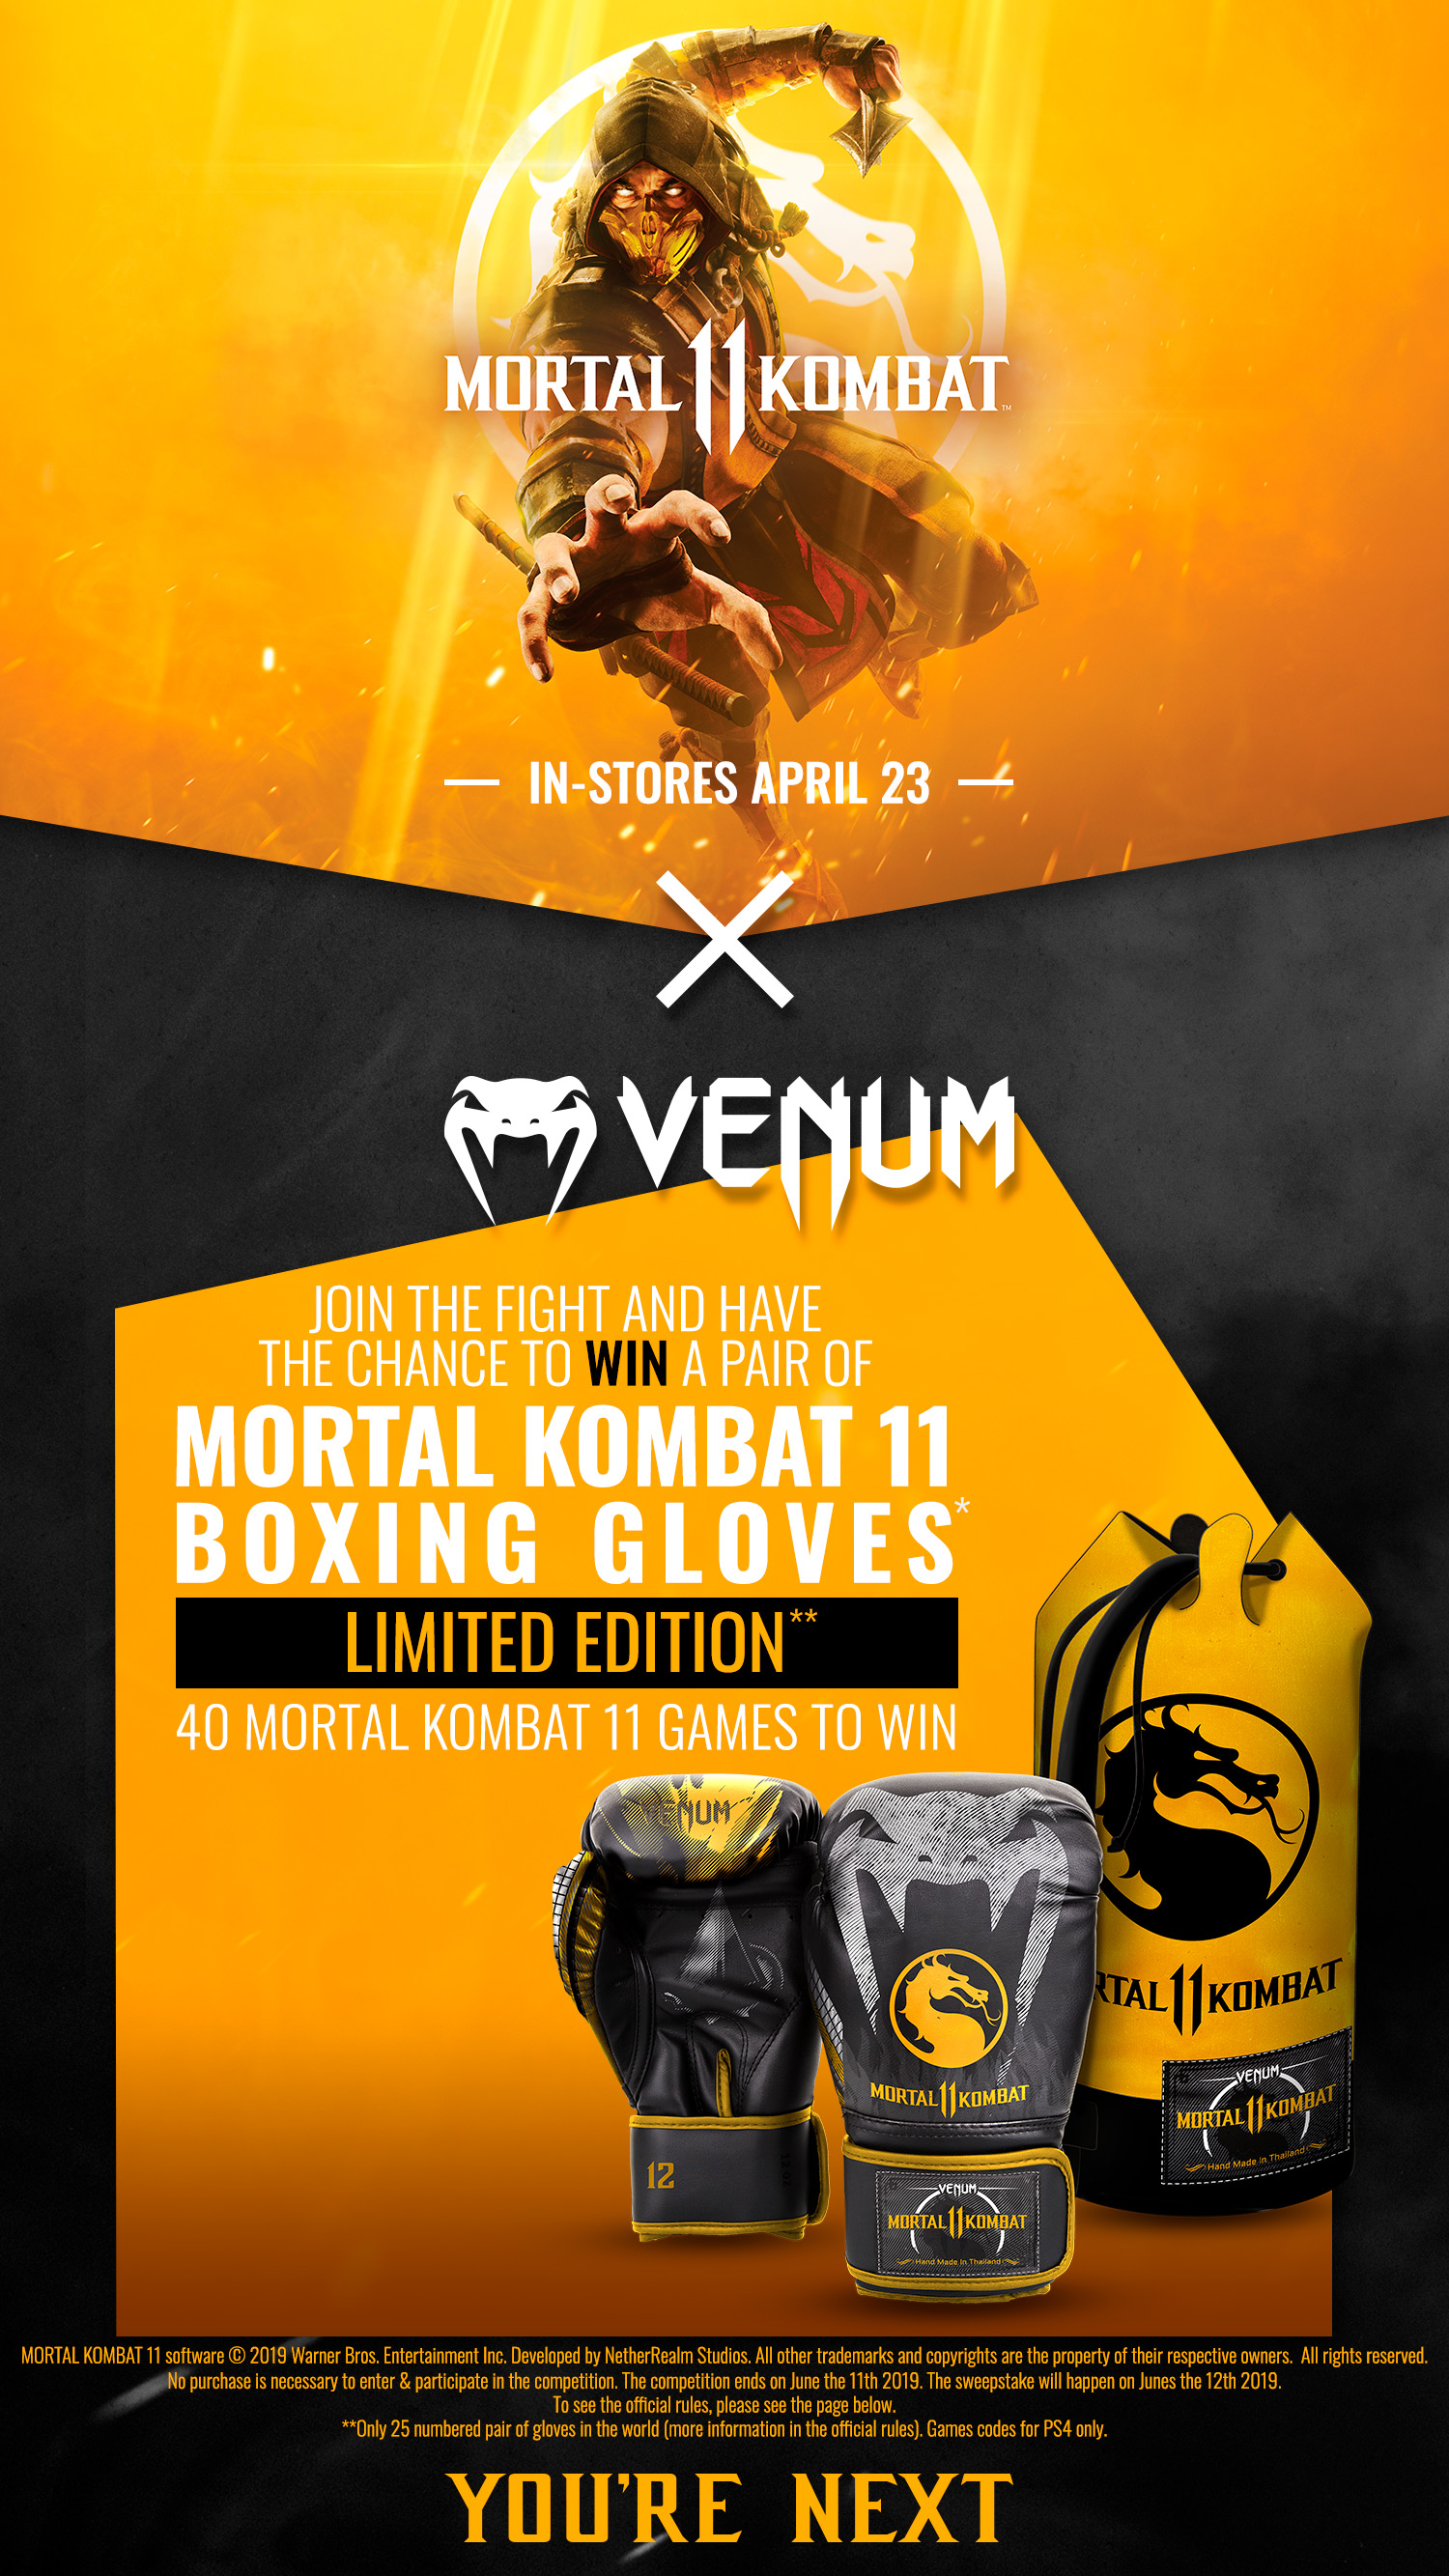 Mortal Kombat 11 x Venum Sweepstakes